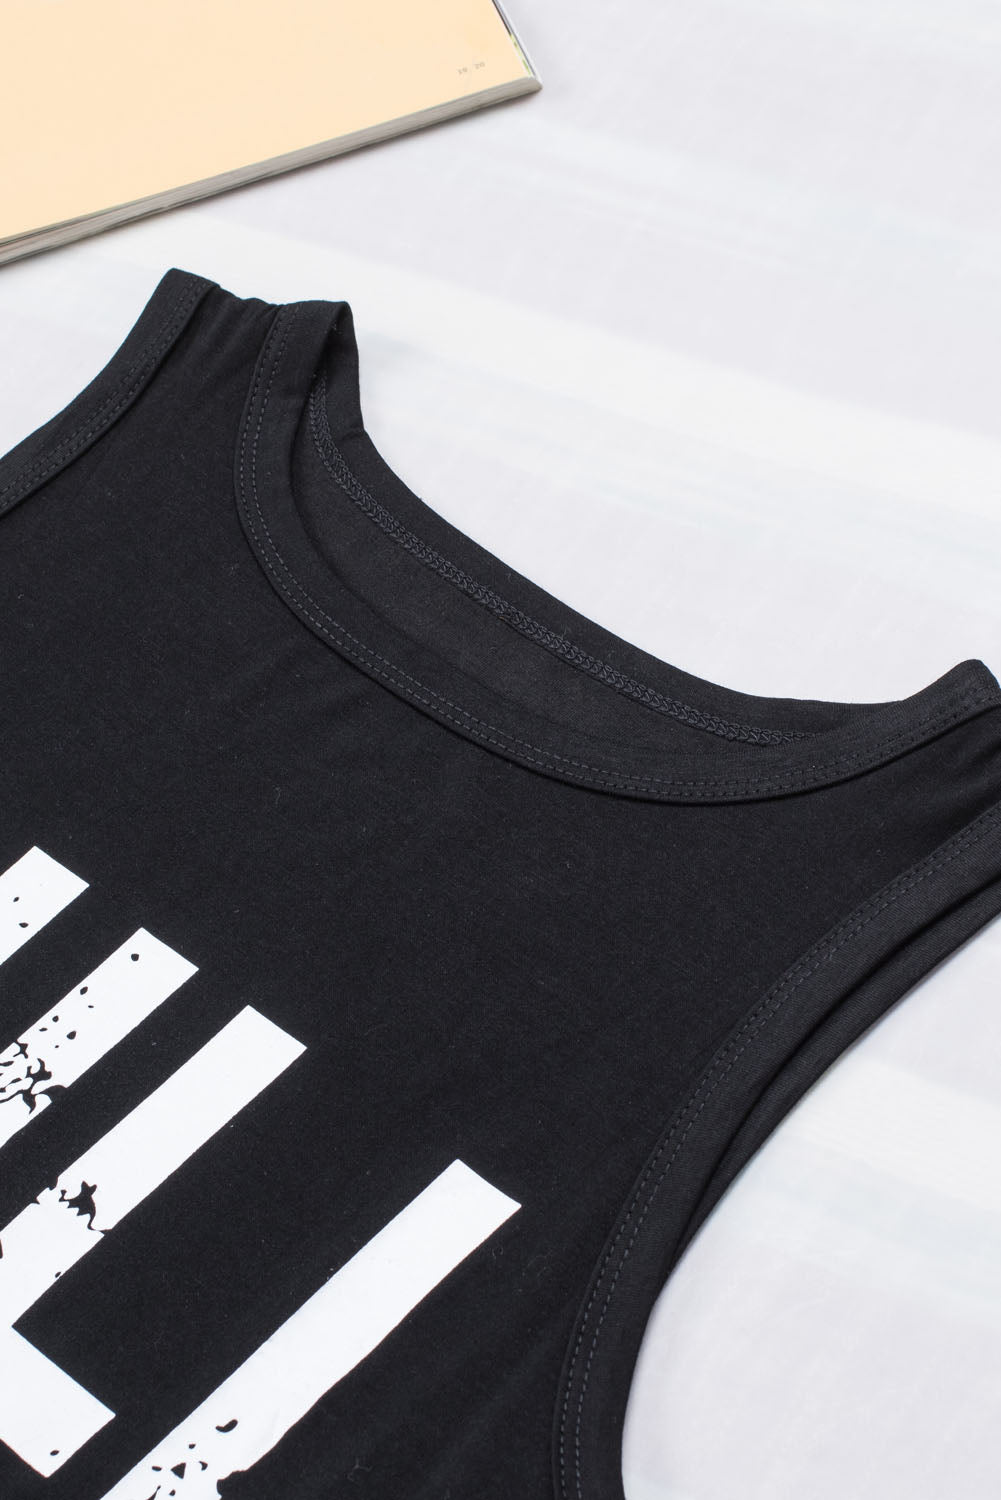 Black CHILL Graphic Print Tank Top Tank Tops JT's Designer Fashion